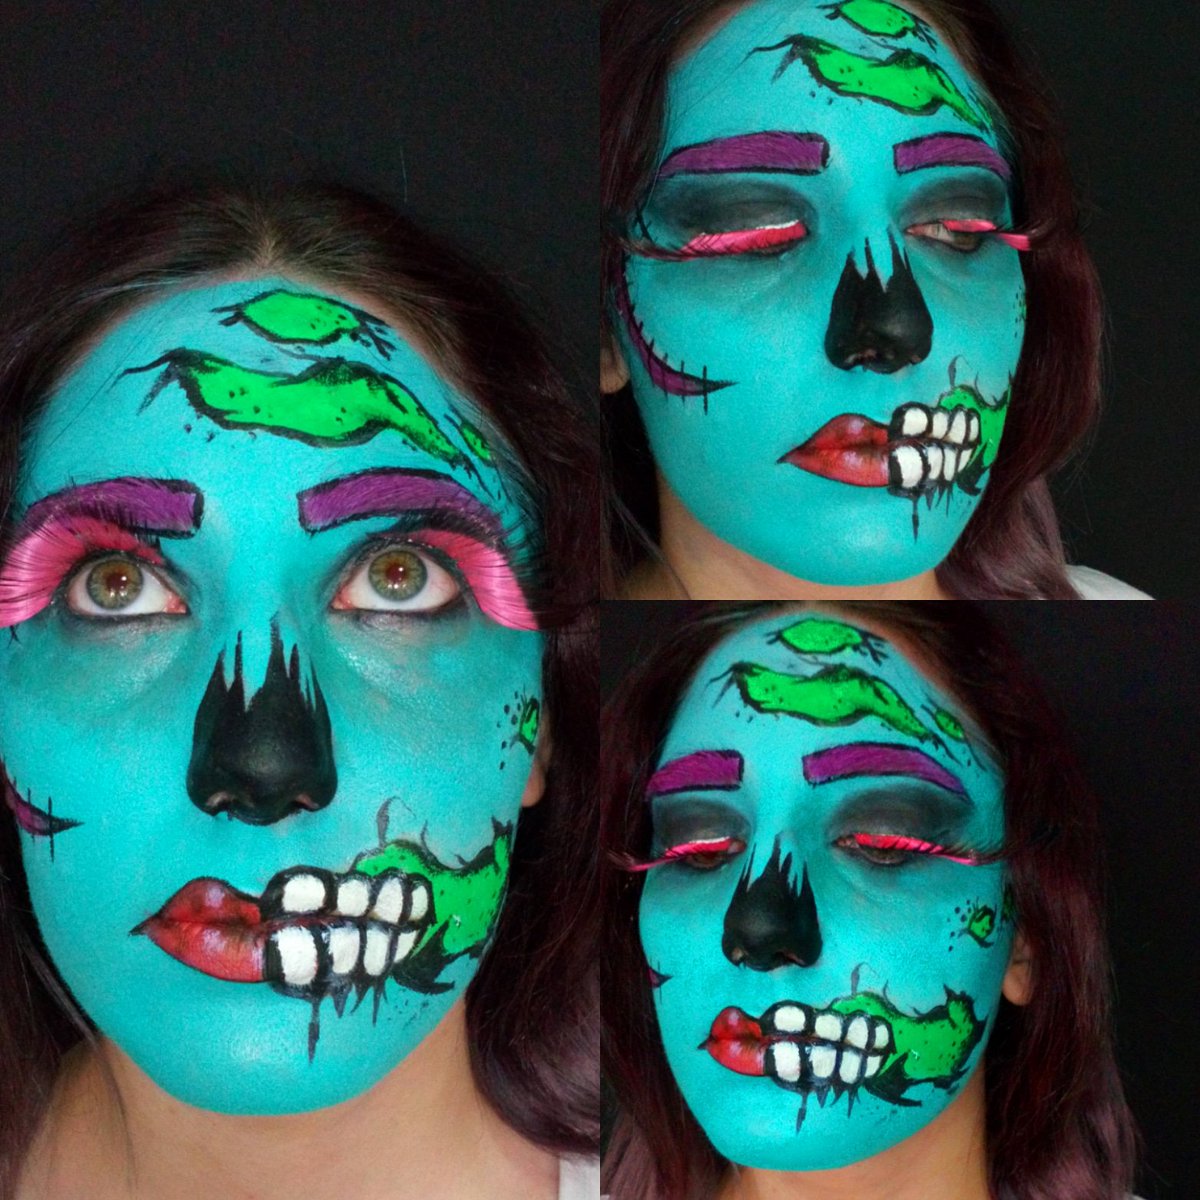 Zombie fantasía

#maquillaje #makeupartist #maquillajefantasia #makeuptime #maquillajeartistico #makeup #maquillajedeldia #maquillajezombie #zombiepinup #zombiepinupgirl #zombiepinupmakeup #neoncolours